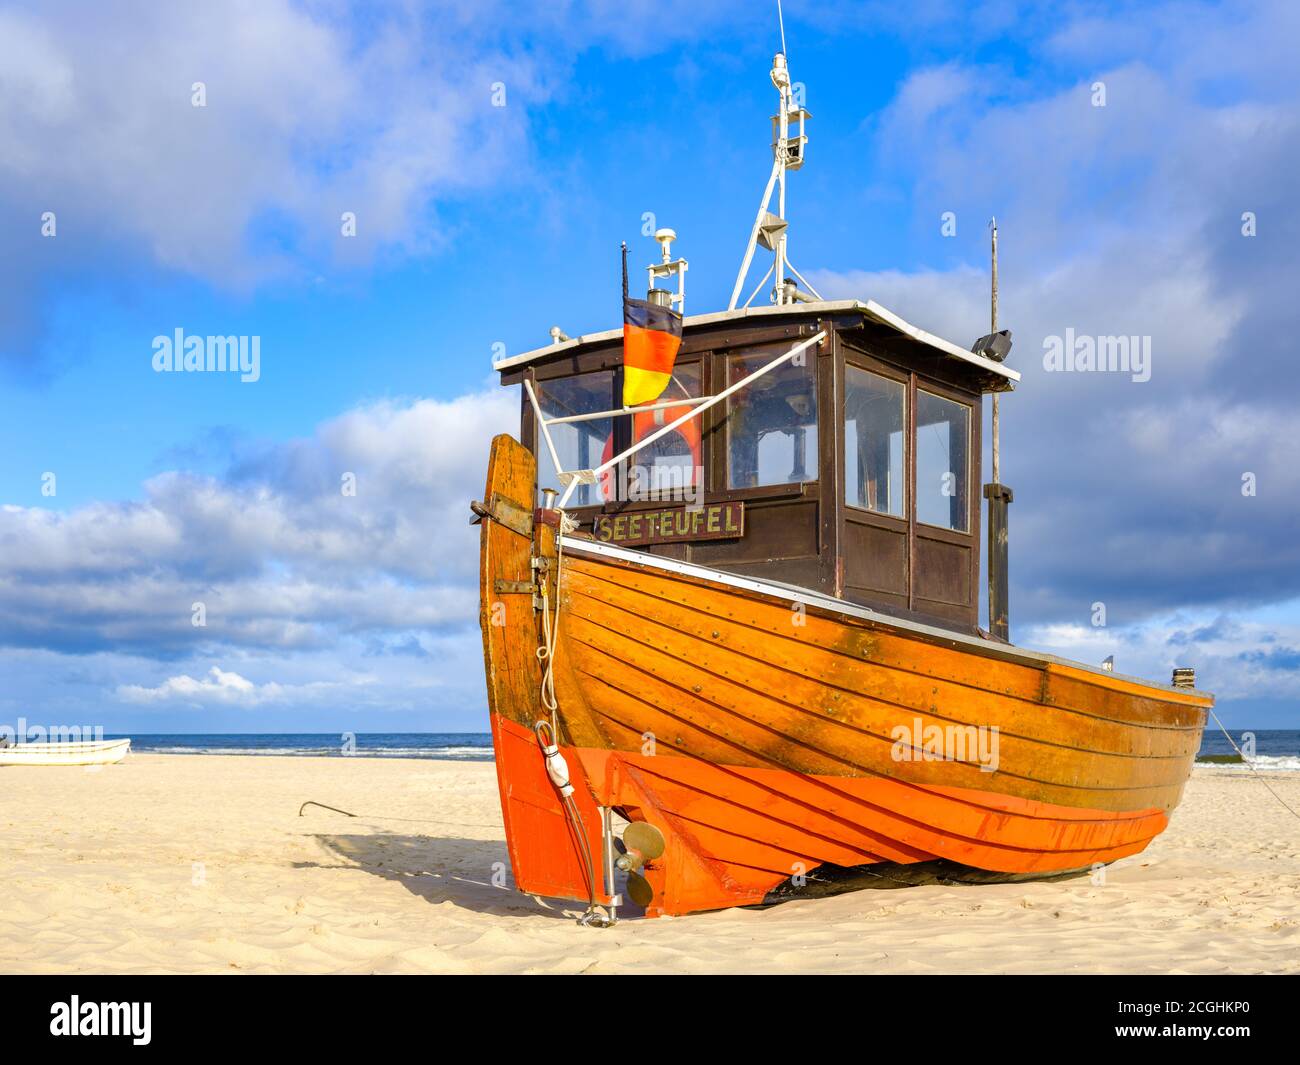 Boat at Usedom island, beach nearby Ahlbeck pier, coast of Baltic Sea Stock Photo